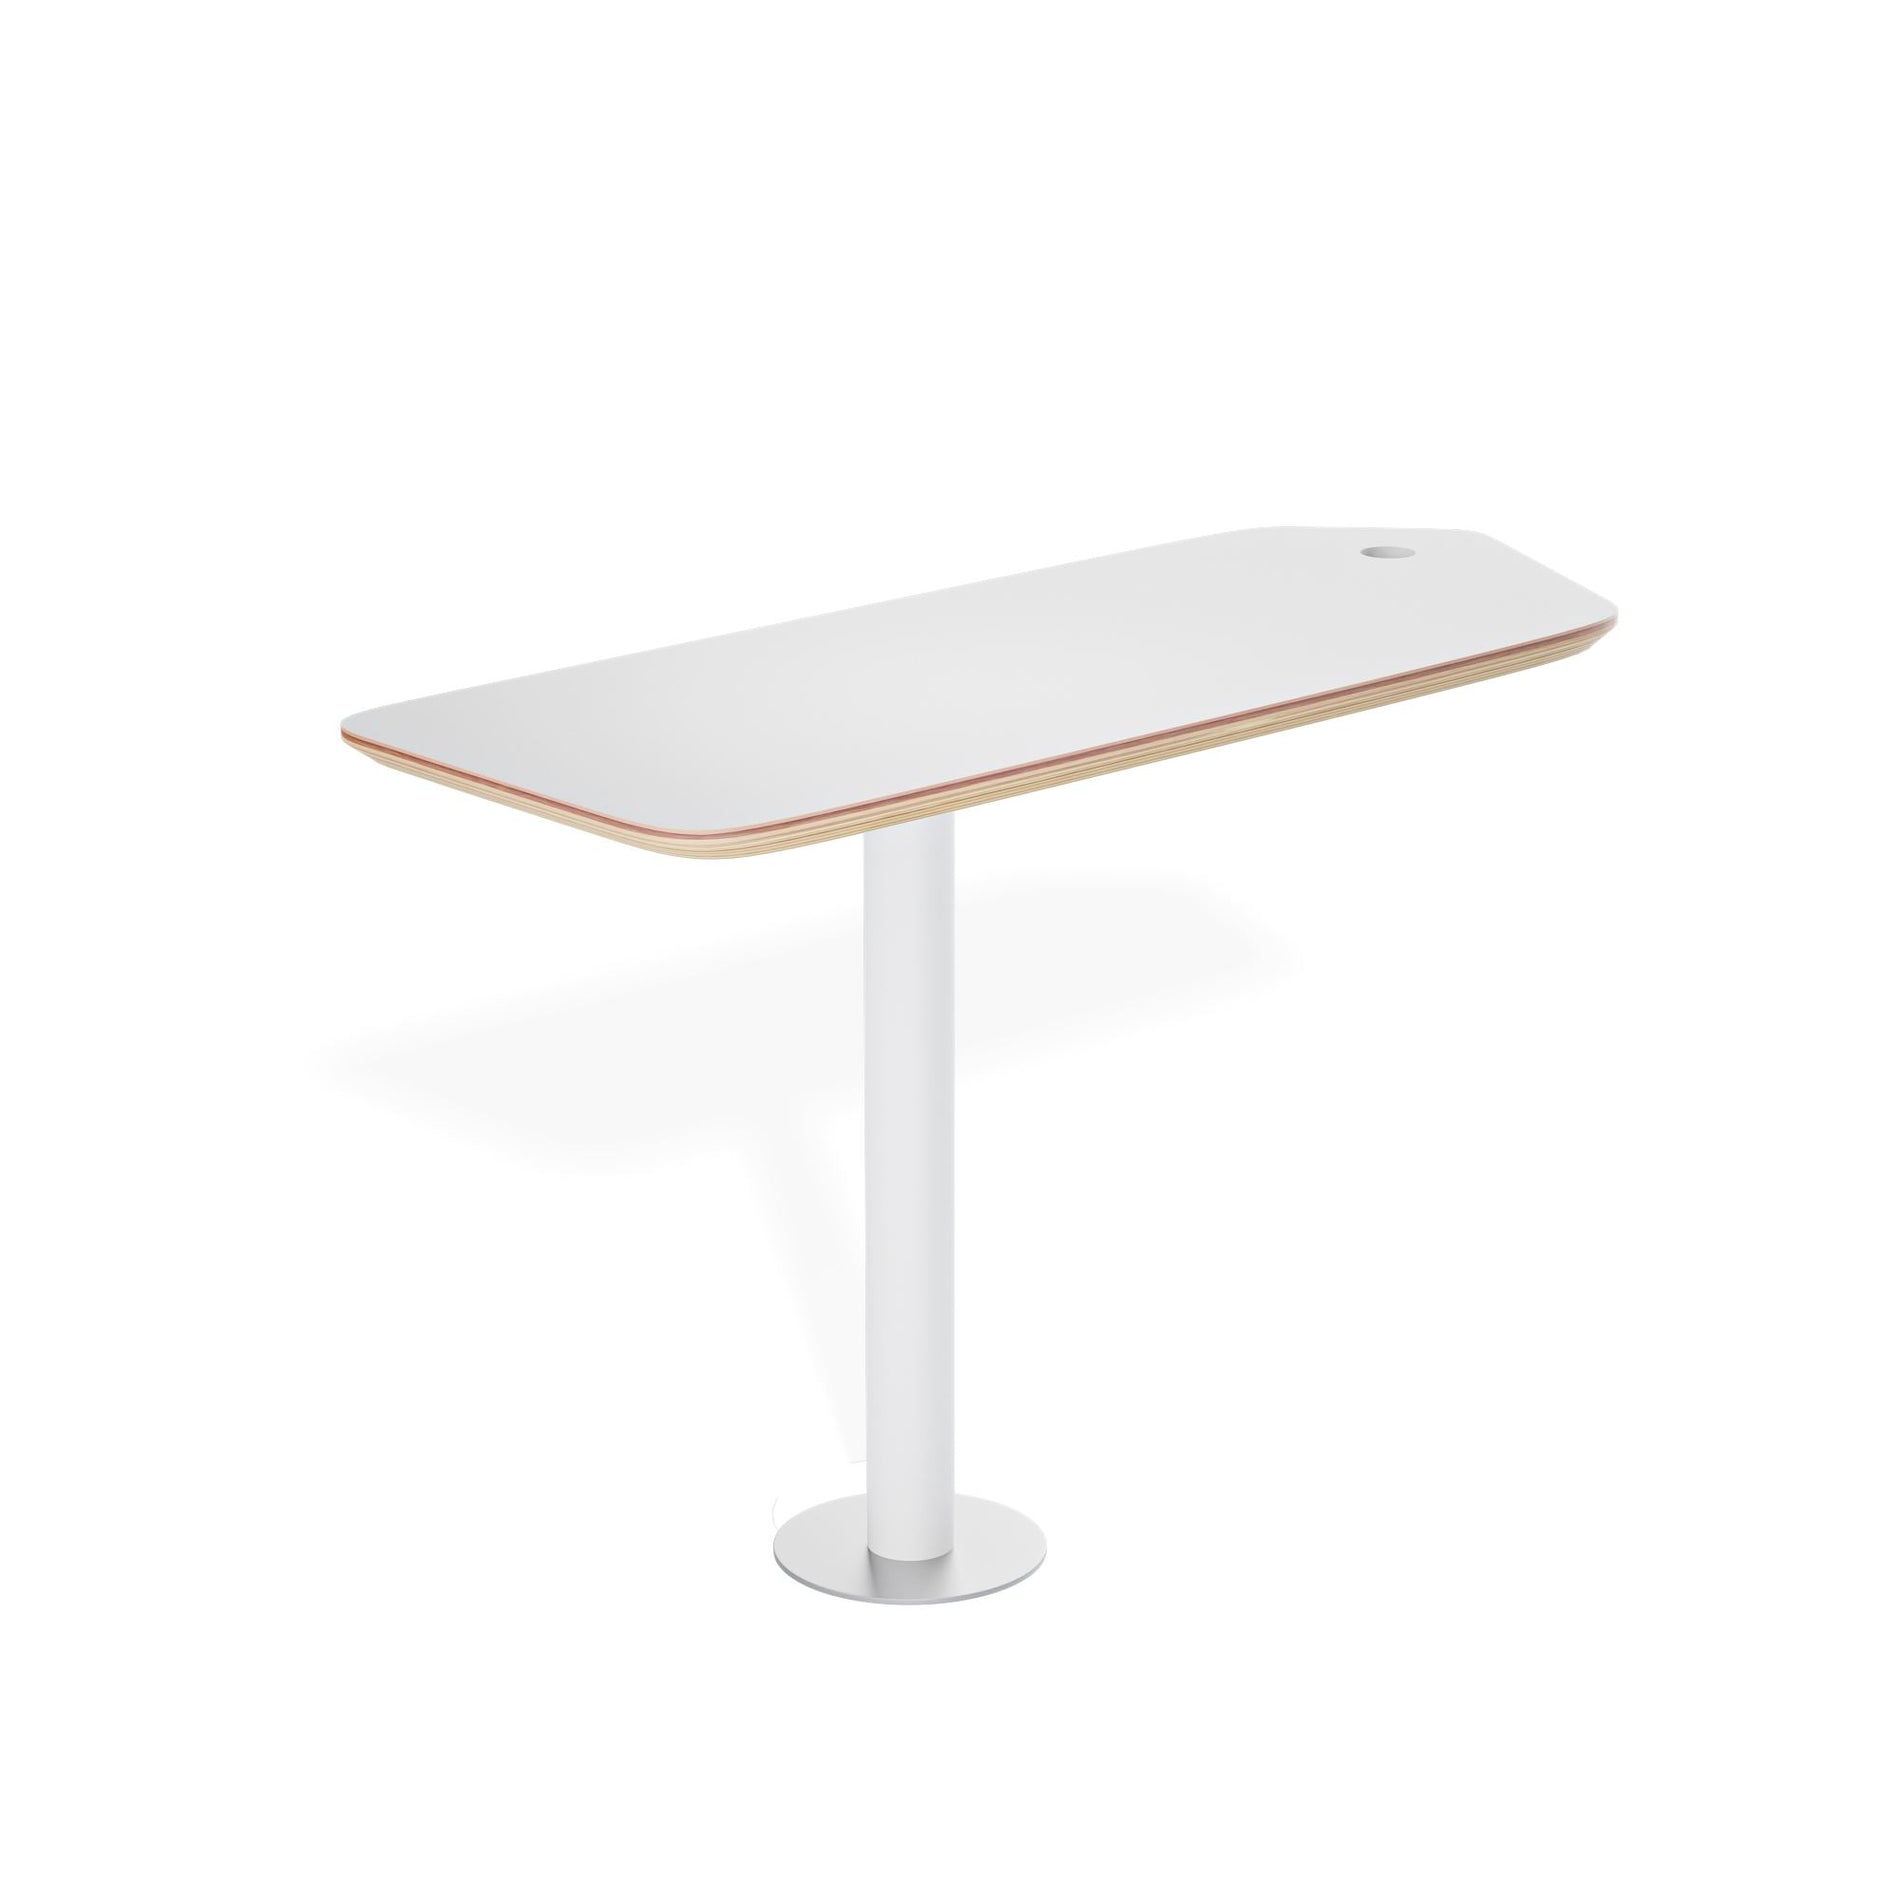 Møbler til telefonbokse til 1-2 personerDiagonal Table